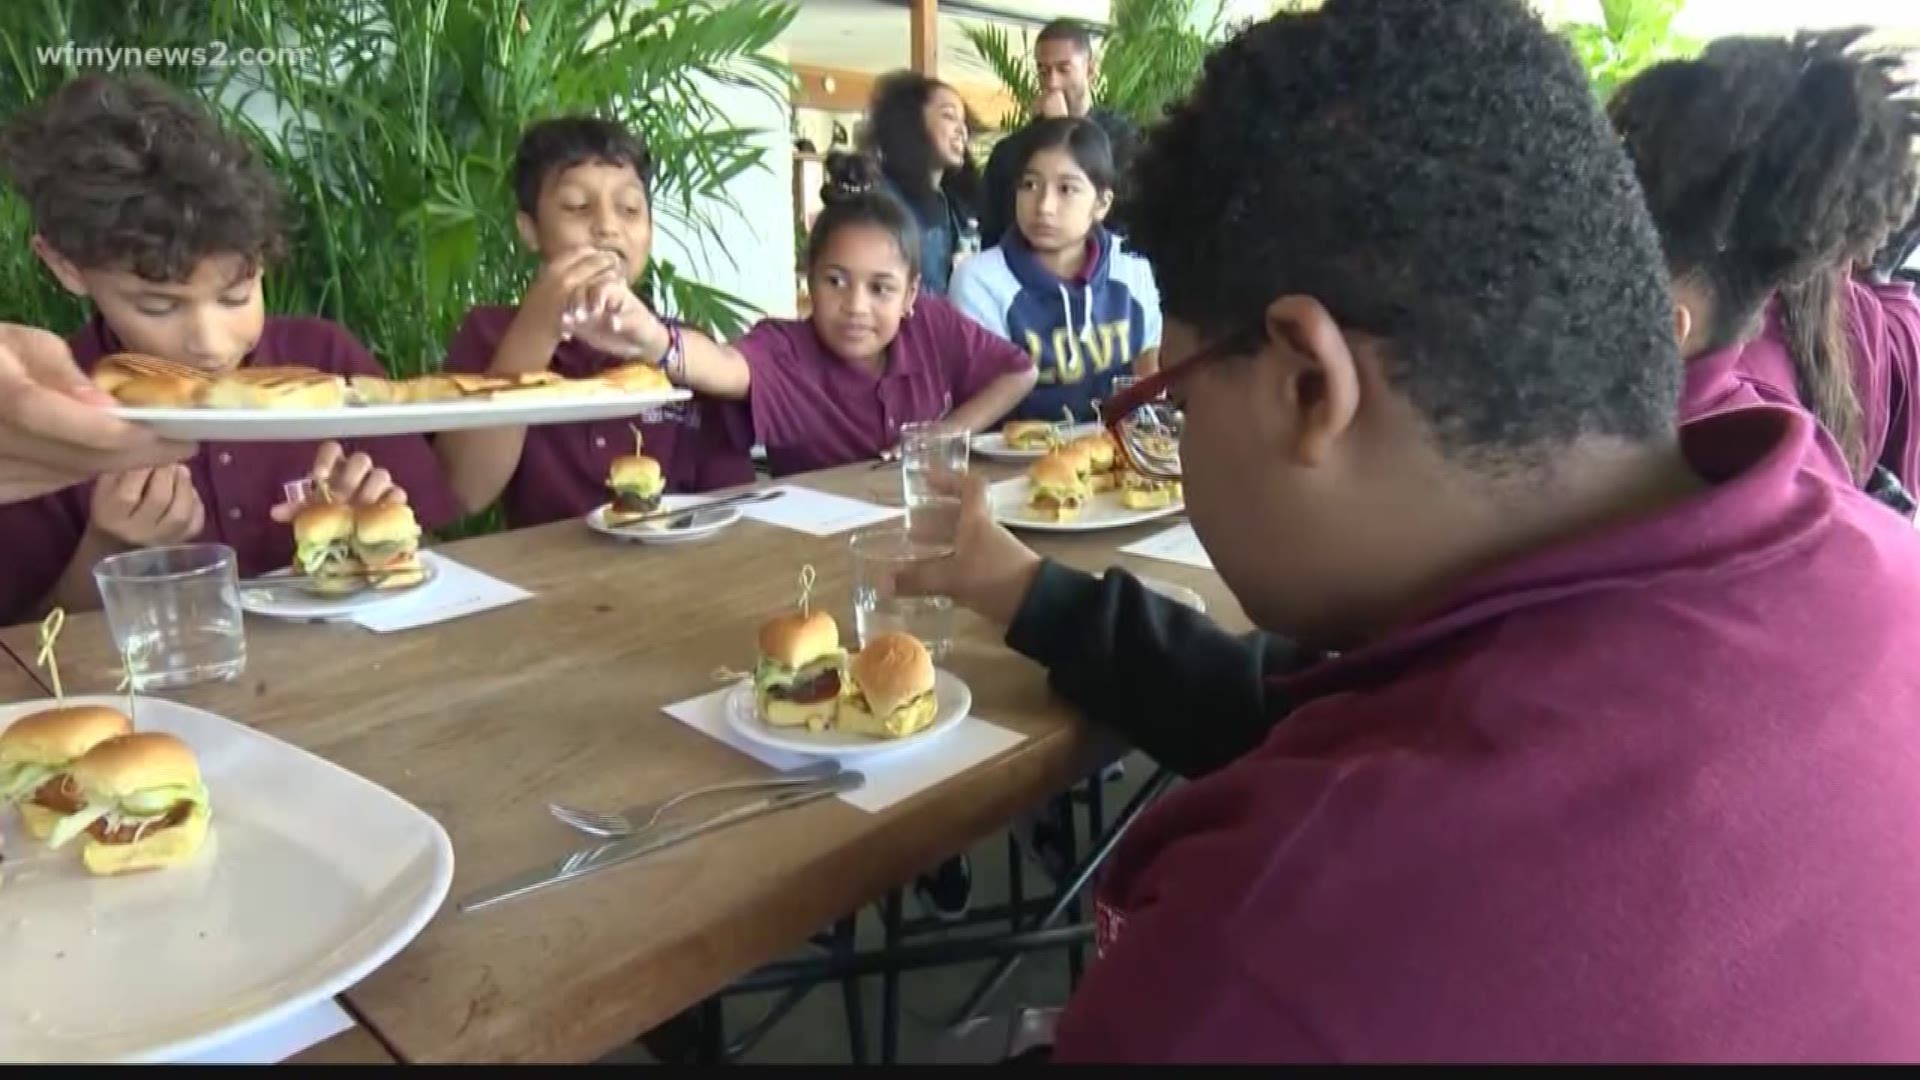 Matt Jones and Tyler Cameron treat kids to meals at restaurants, while teaching them nutrition.